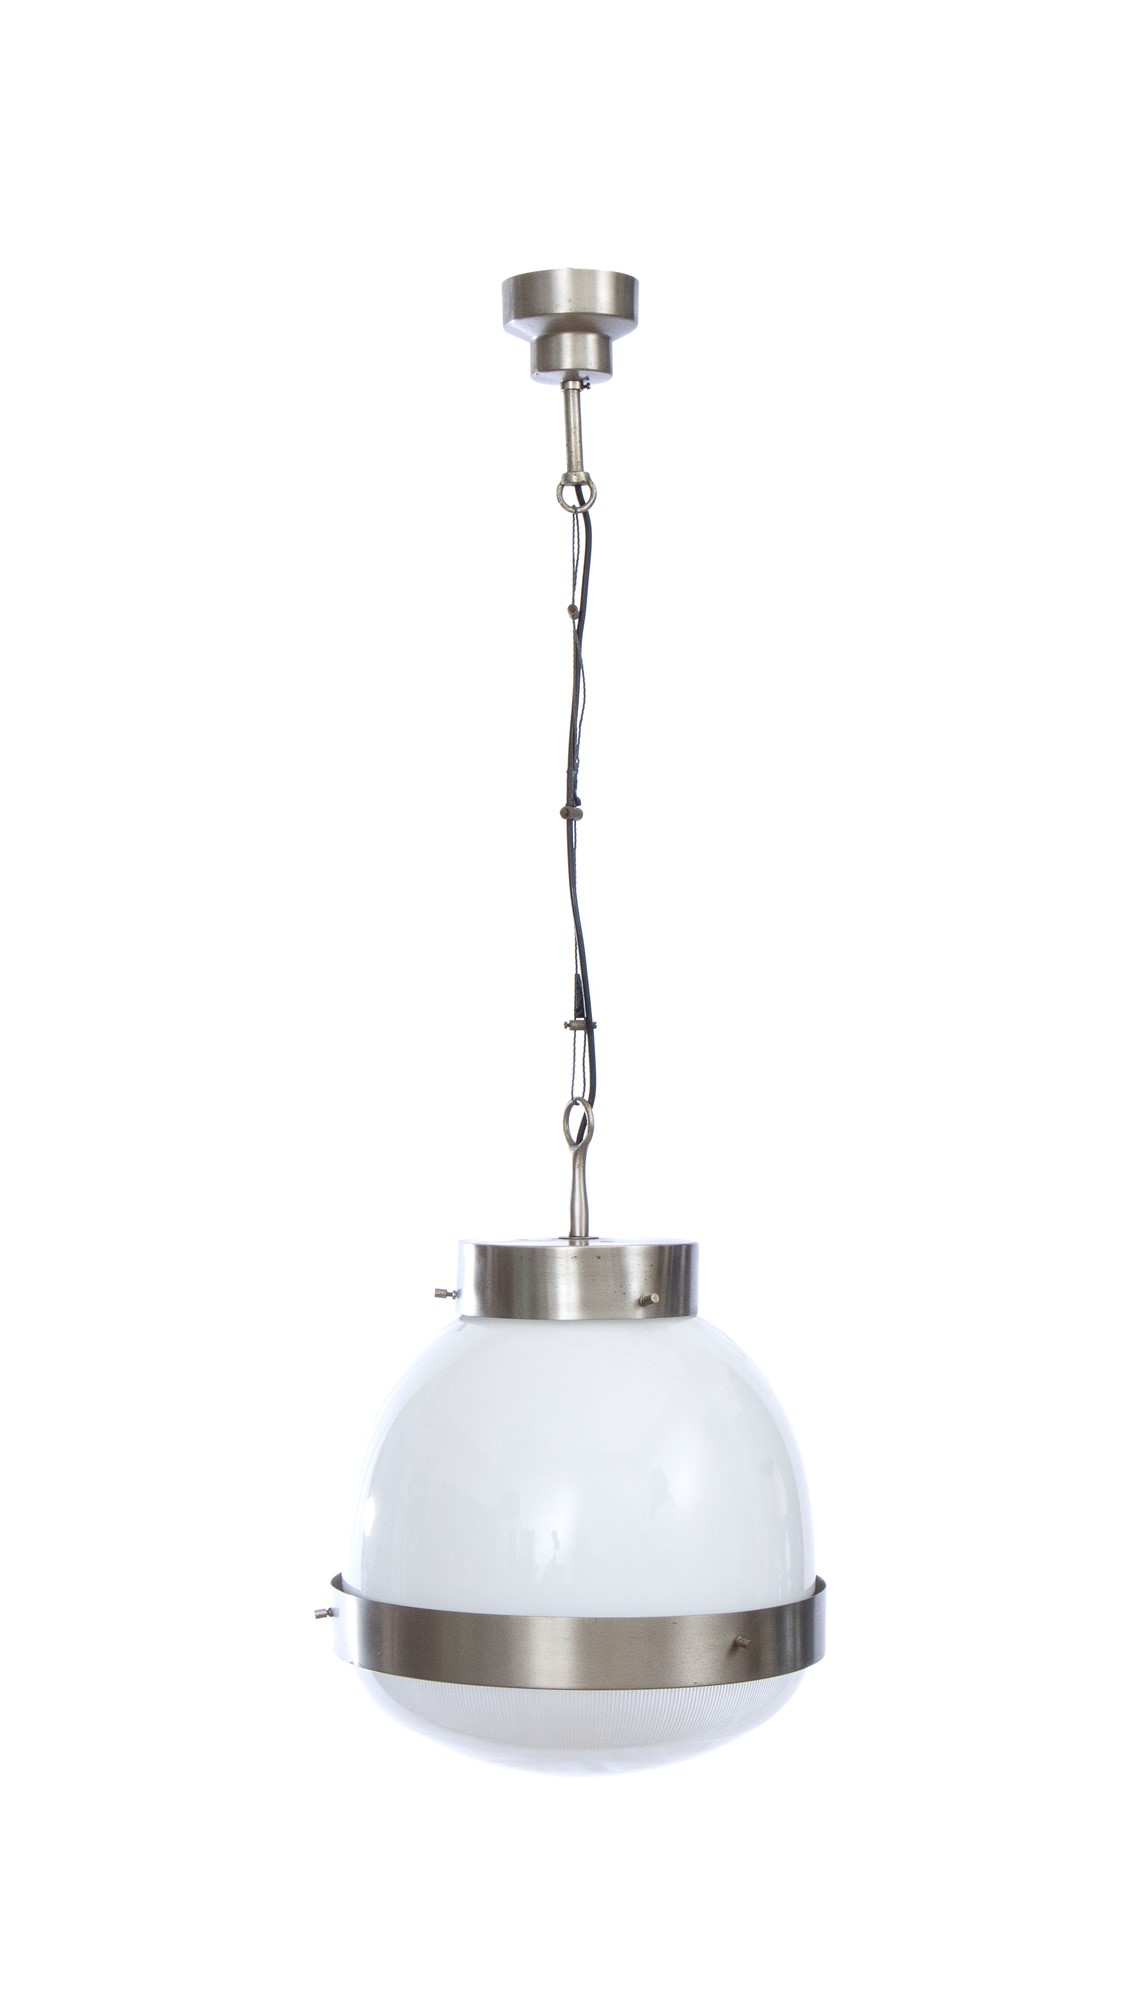 Suspension lamp mod. Delta - Image 3 of 11